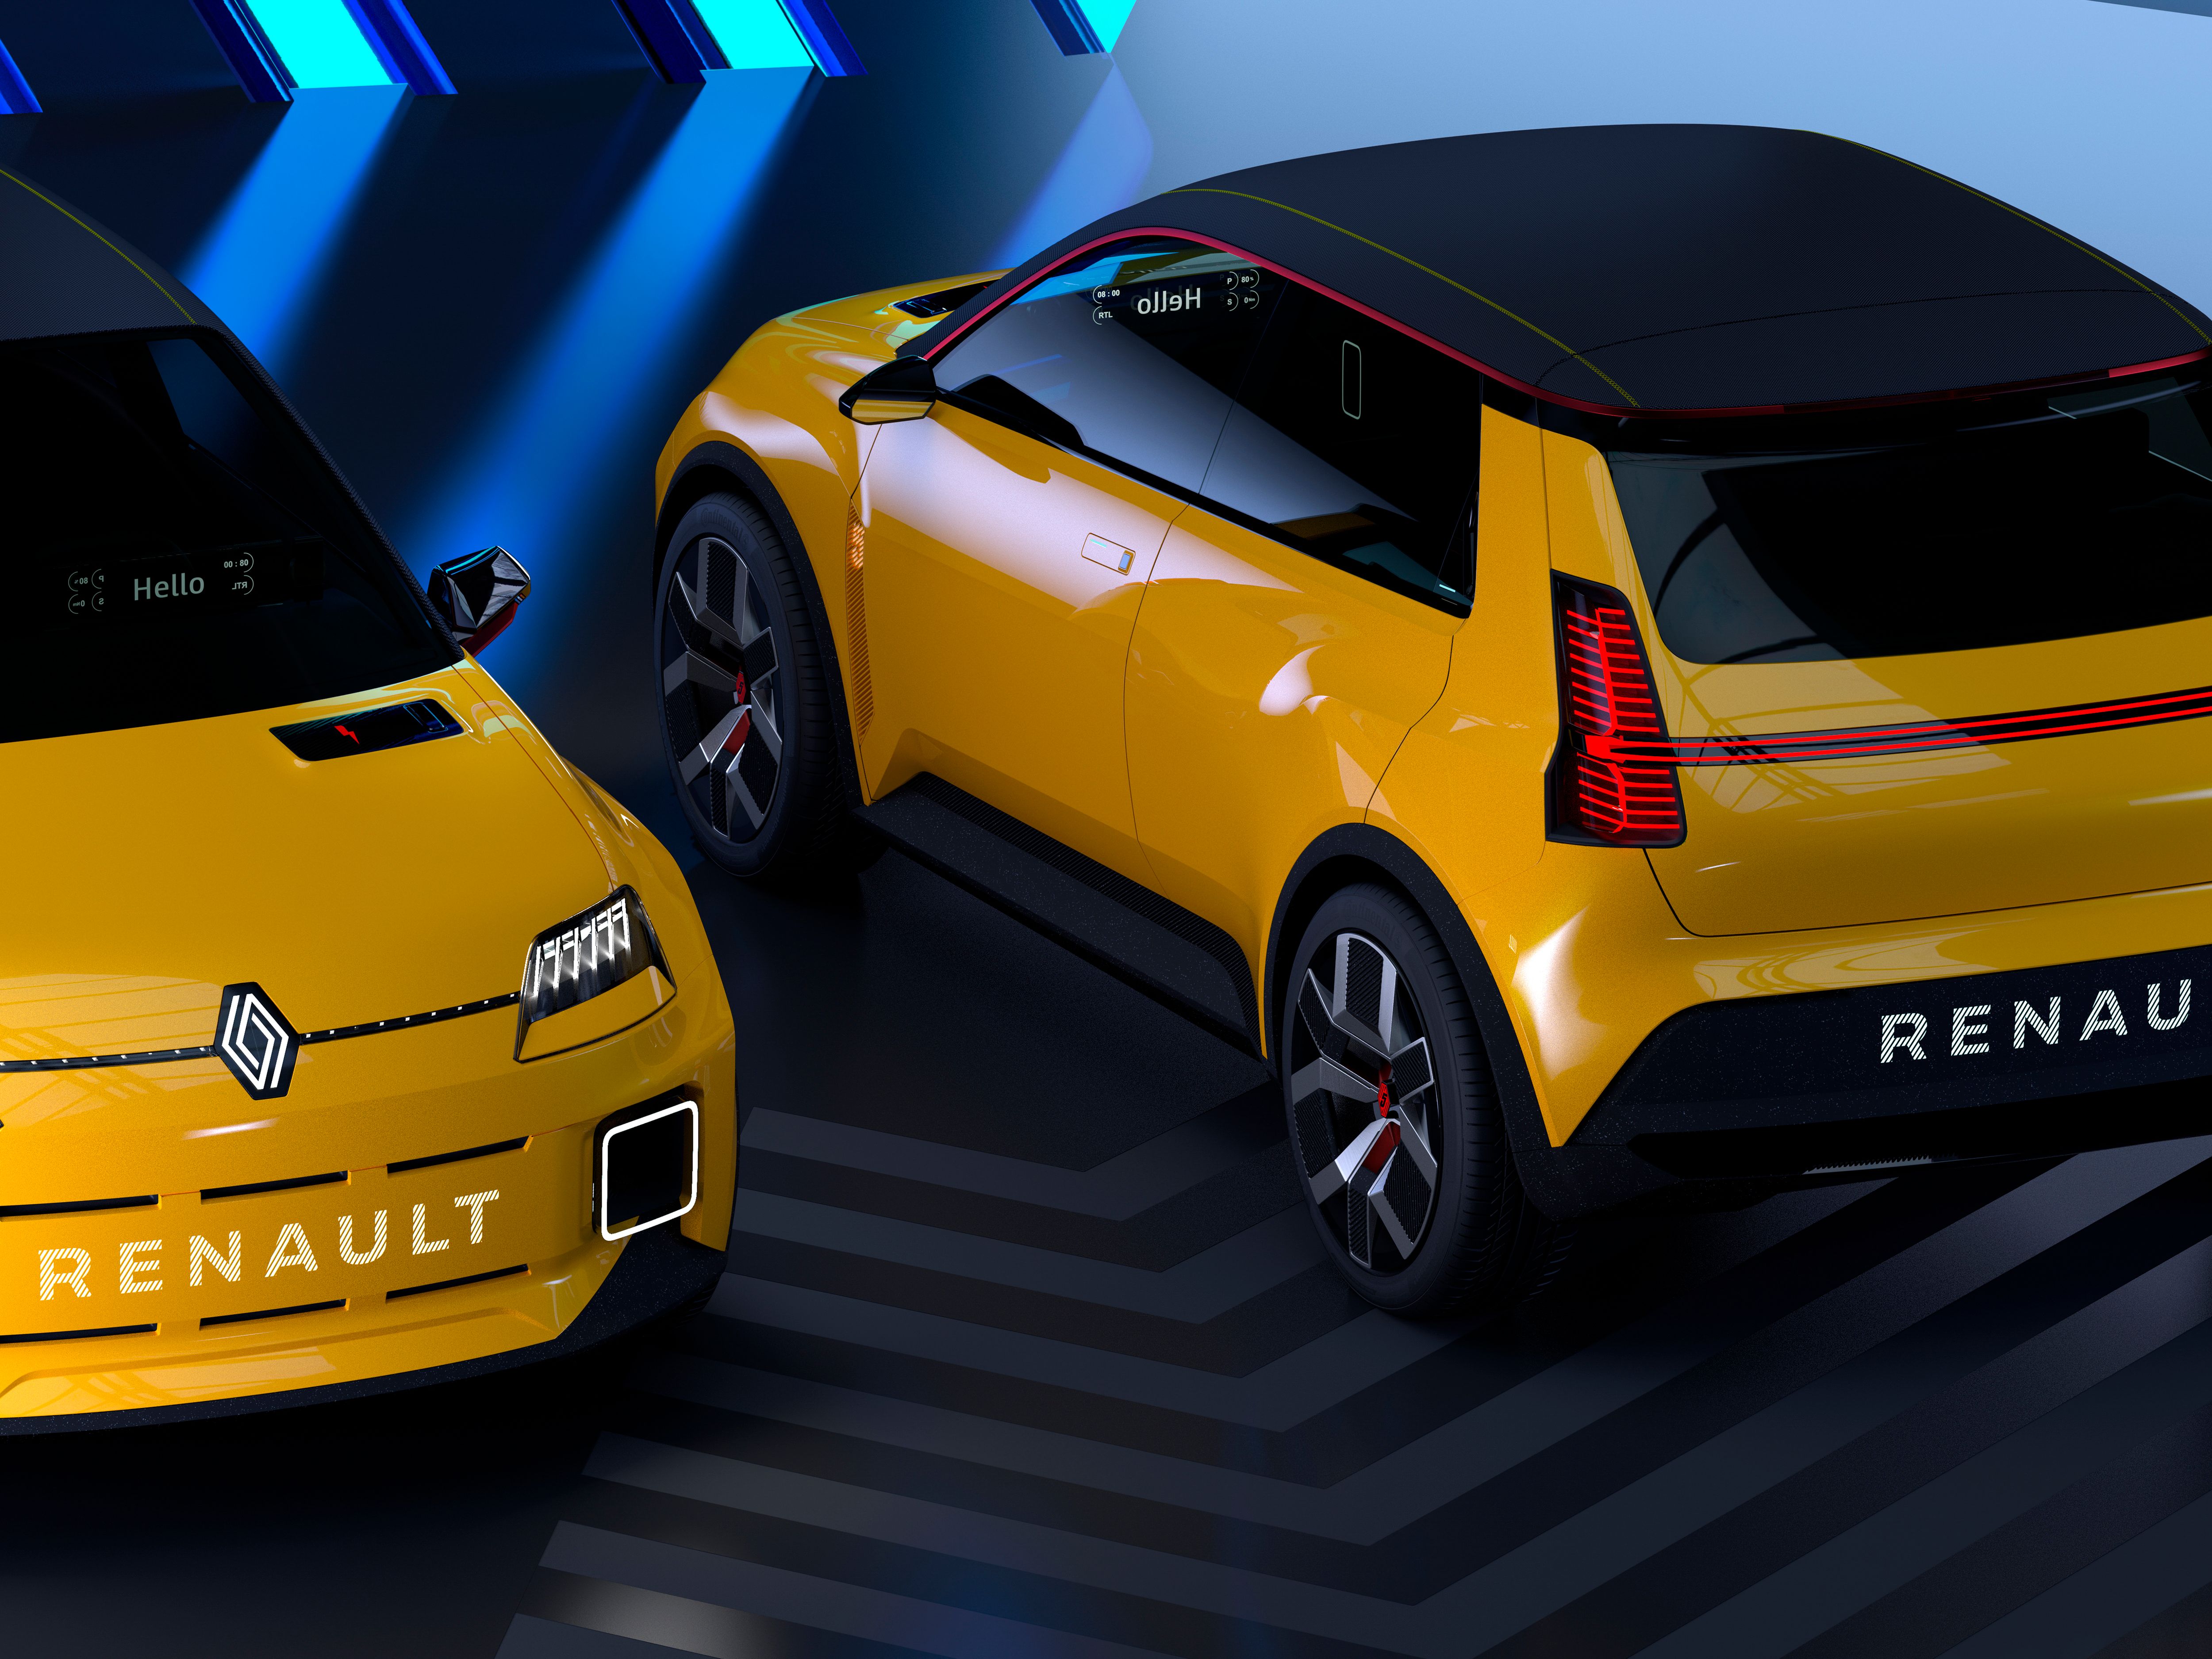 2021 Renault 5 Prototype - A Glimpse Into The Future